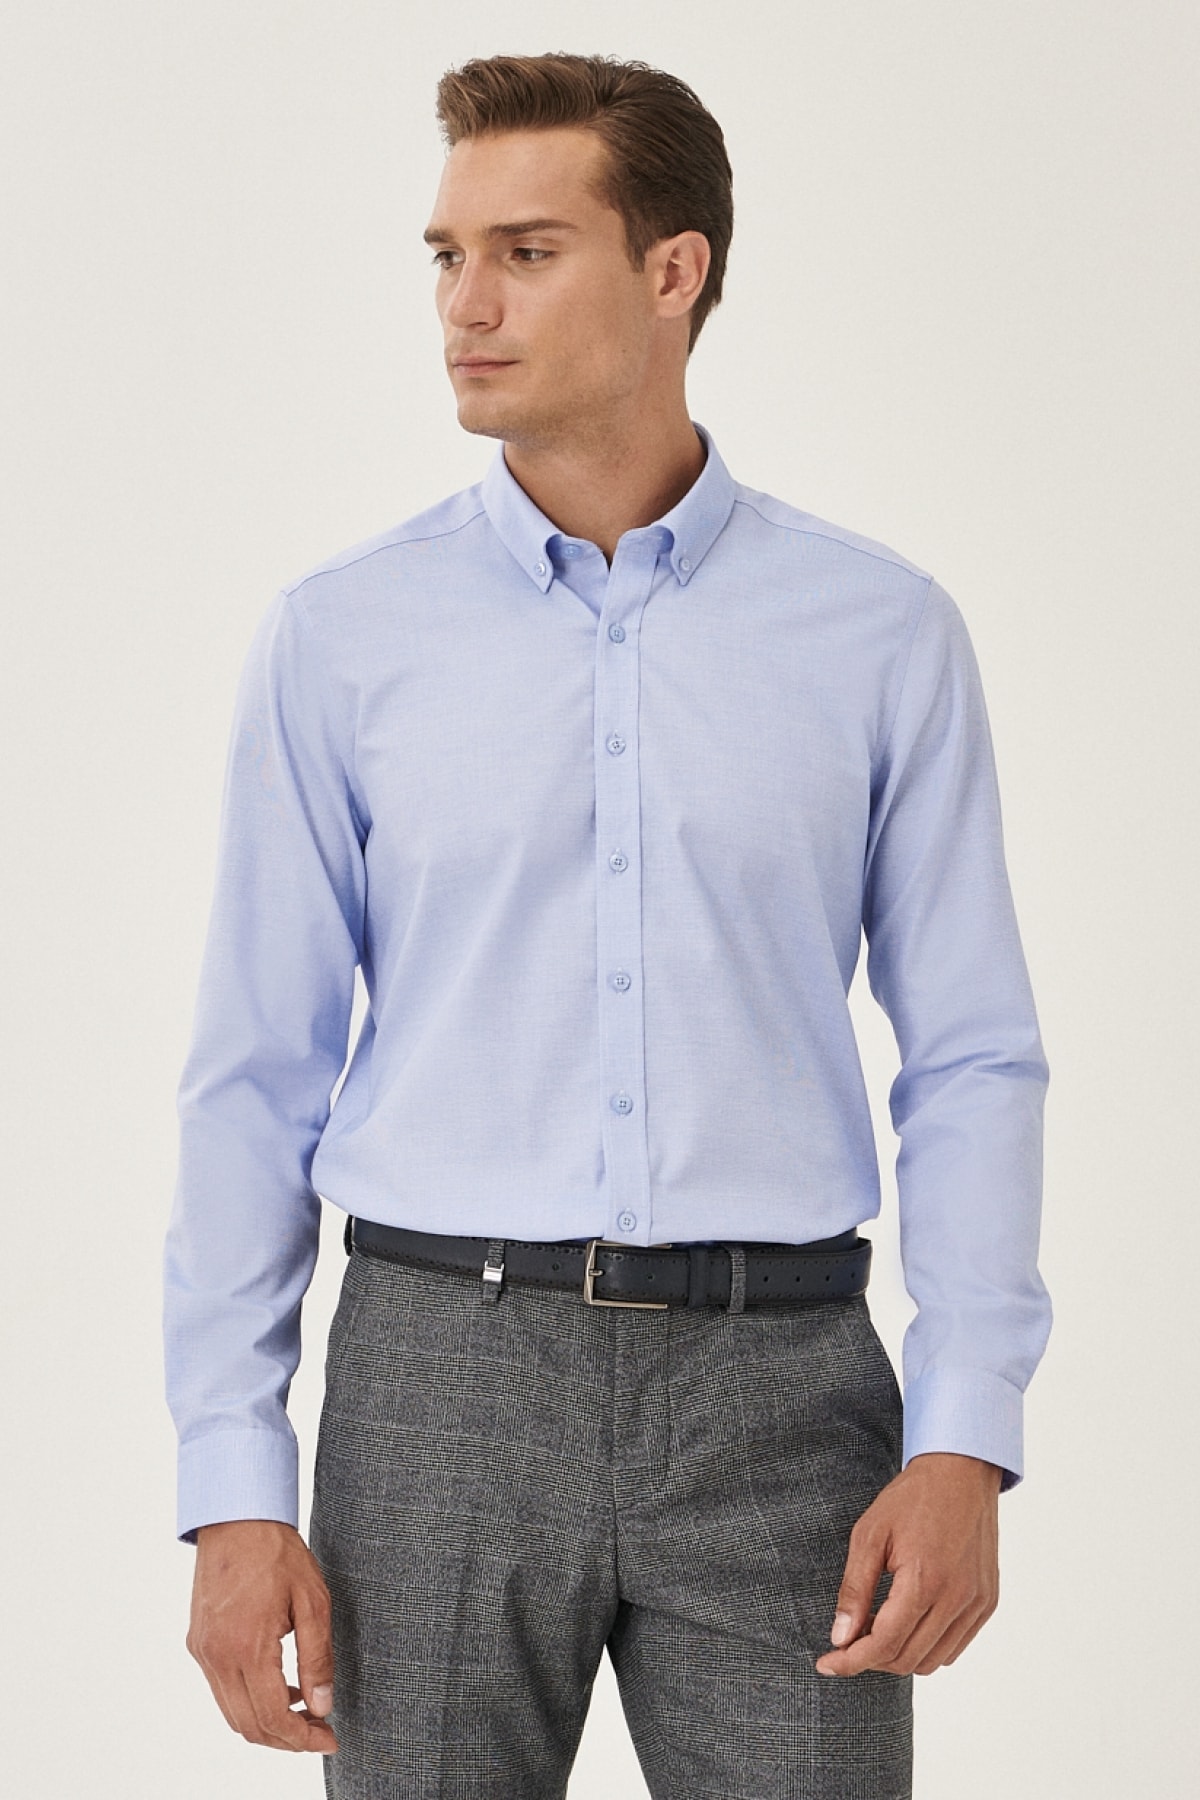 ALTINYILDIZ CLASSICS Men's Light Blue No Iron Non-iron Slim Fit Slim Fit 100% Cotton Buttoned Collar Shirt